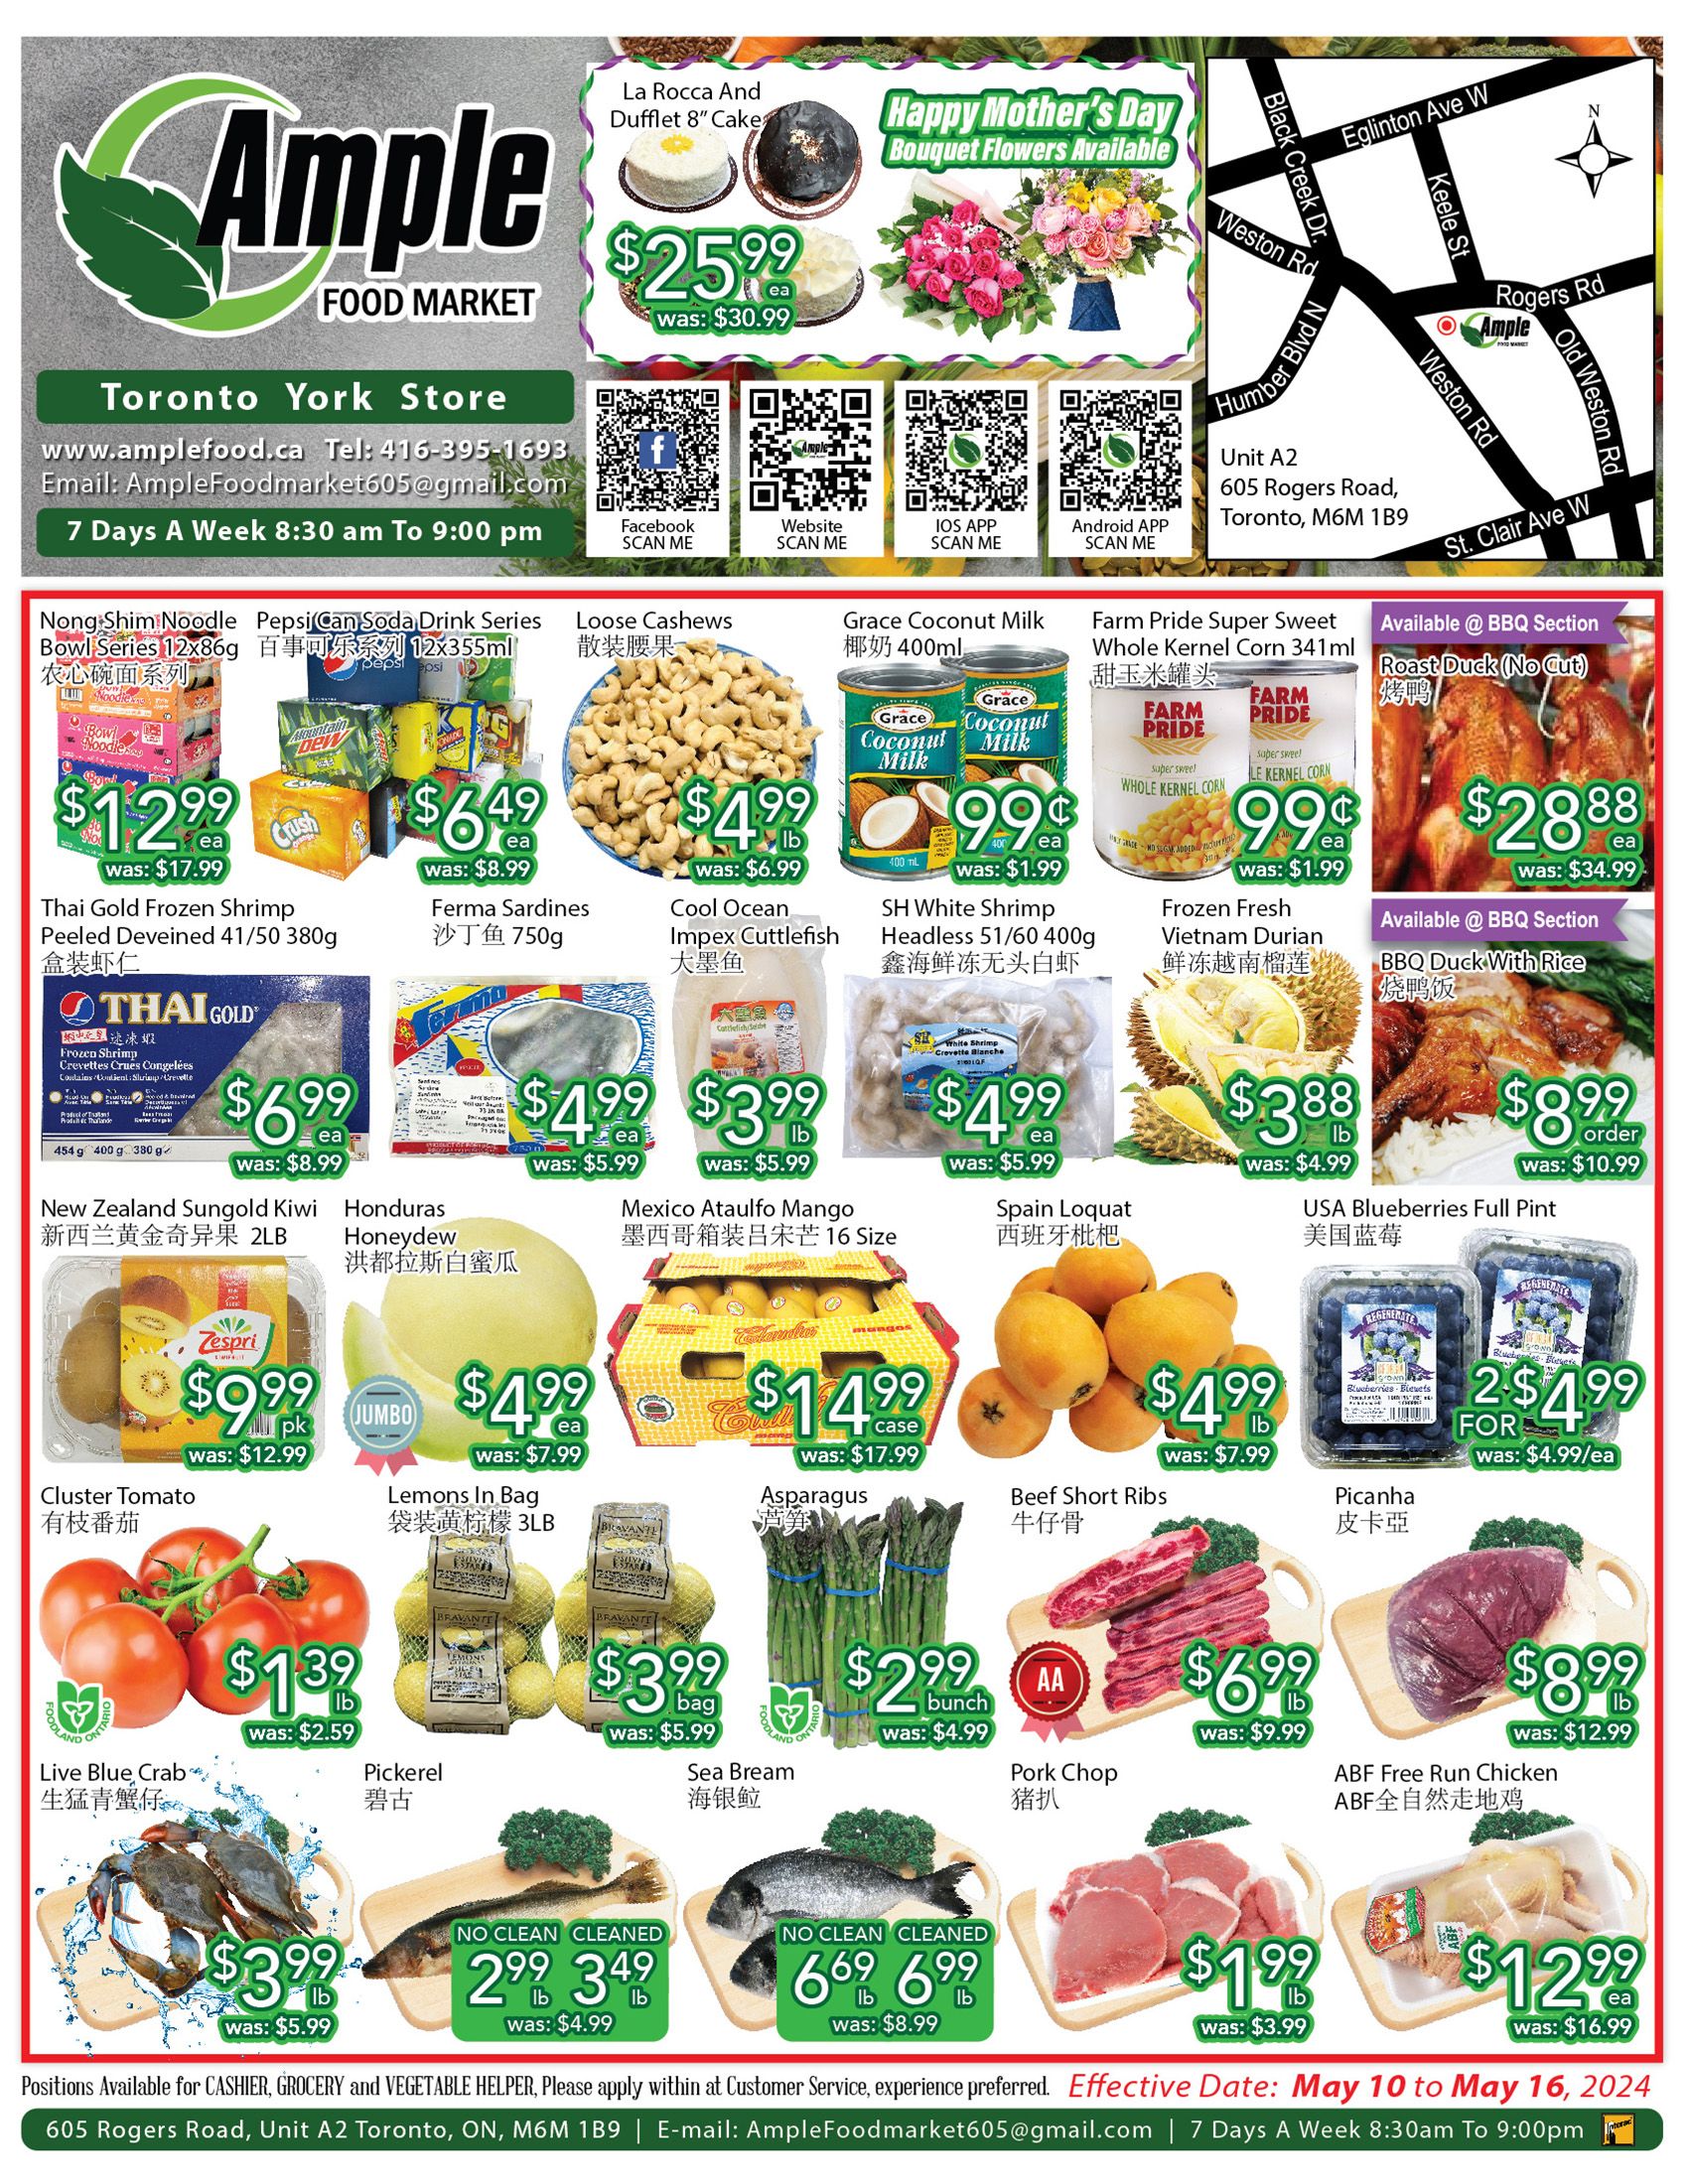 Ample Food Market - Toronto York Store - Weekly Flyer Specials